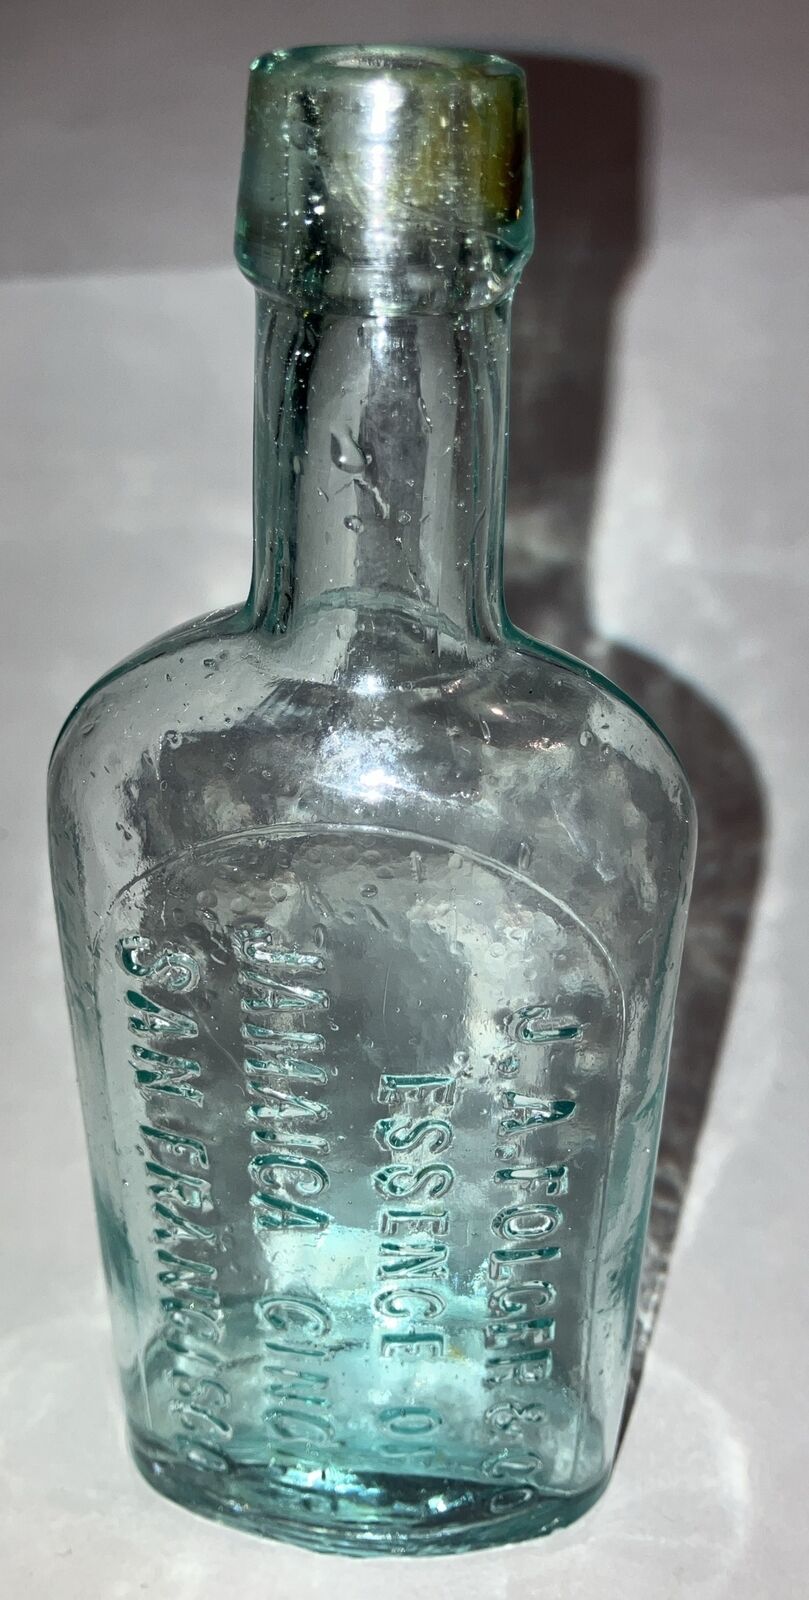 Atq J.A. FOLGER &CO ESSENCE OF JAMAICA GINGER SAN FRANCISCO Aqua Bitters Bottle